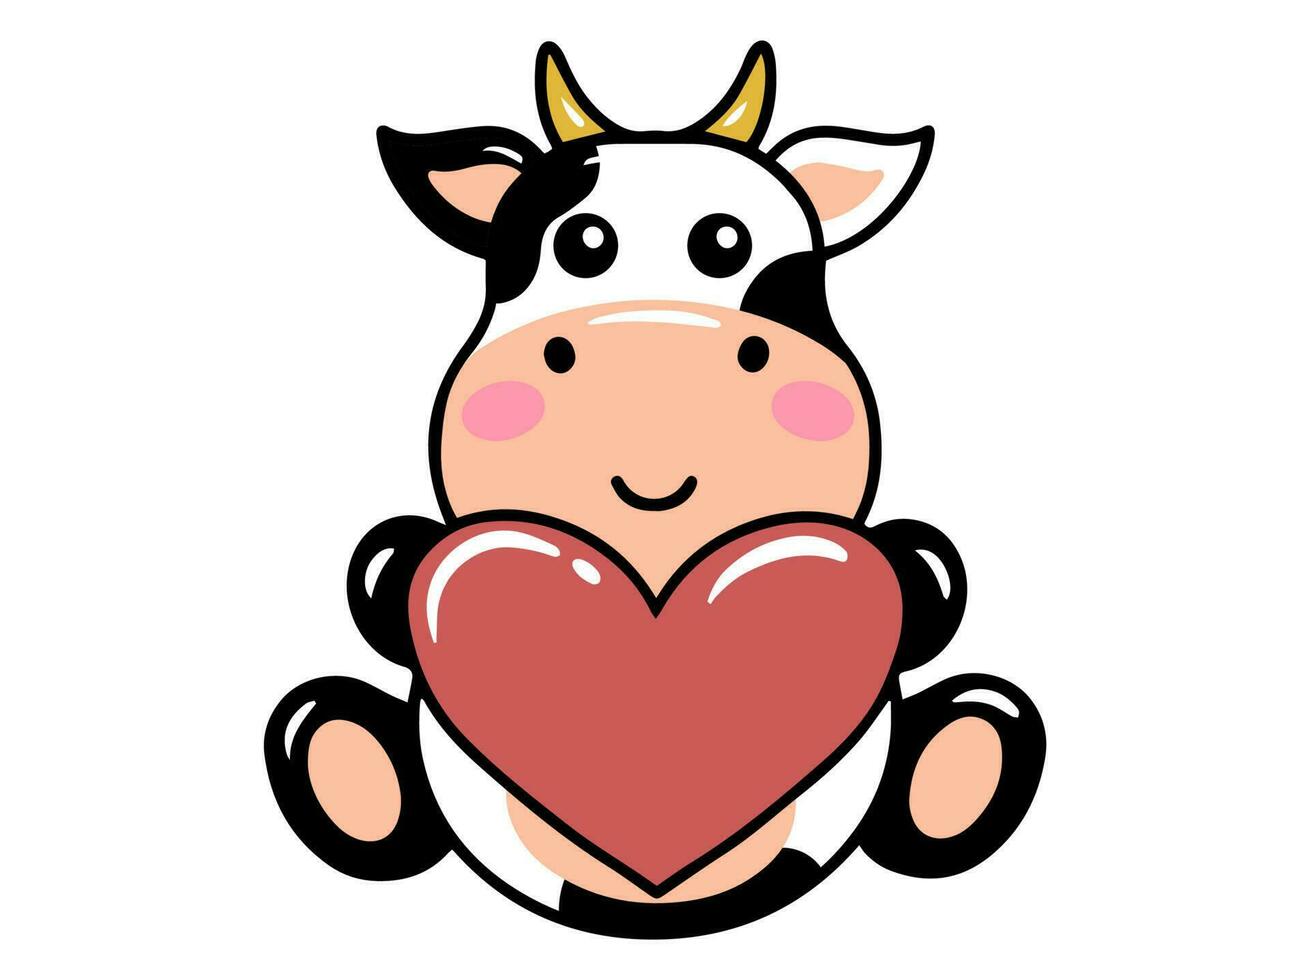 Cute cartoon Cow drawing illustration vector